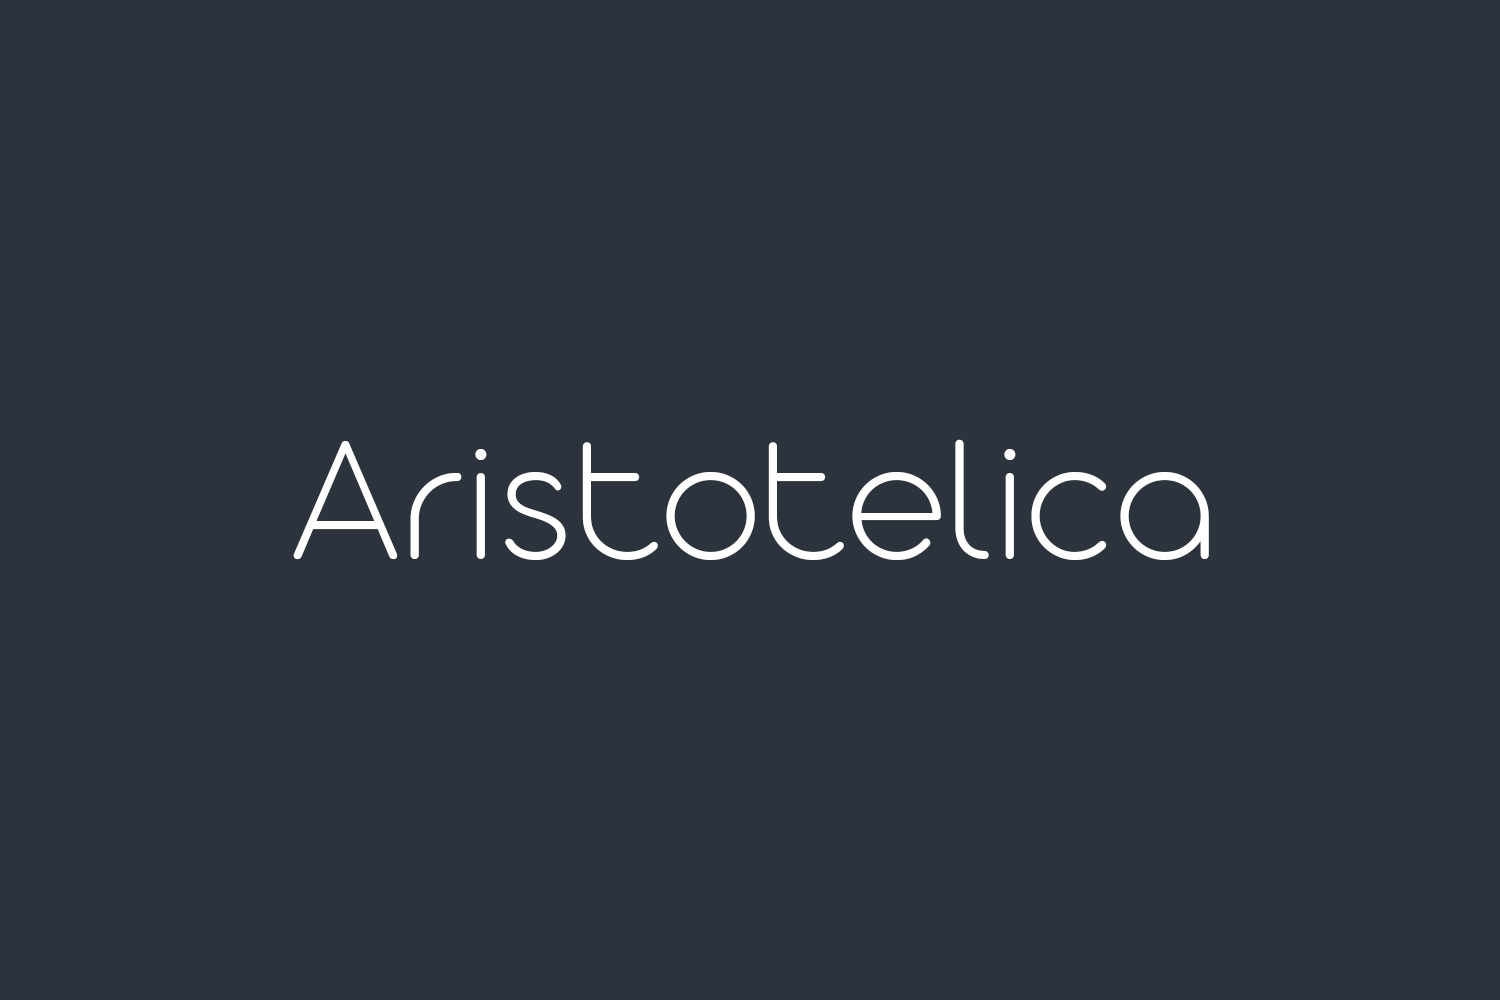 Aristotelica Free Font